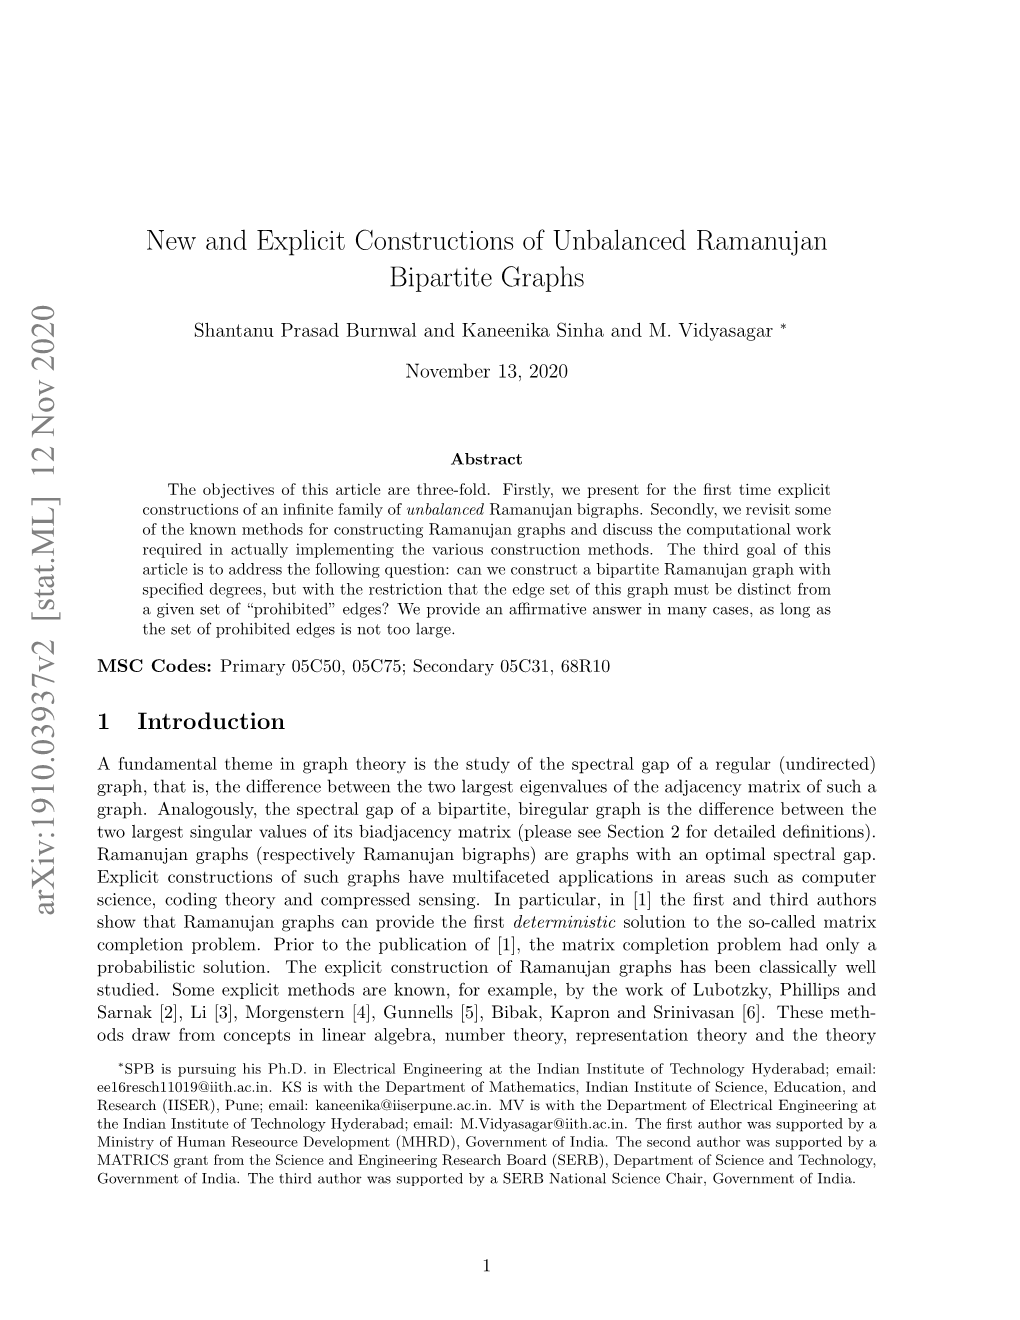 New and Explicit Constructions of Unbalanced Ramanujan Bipartite